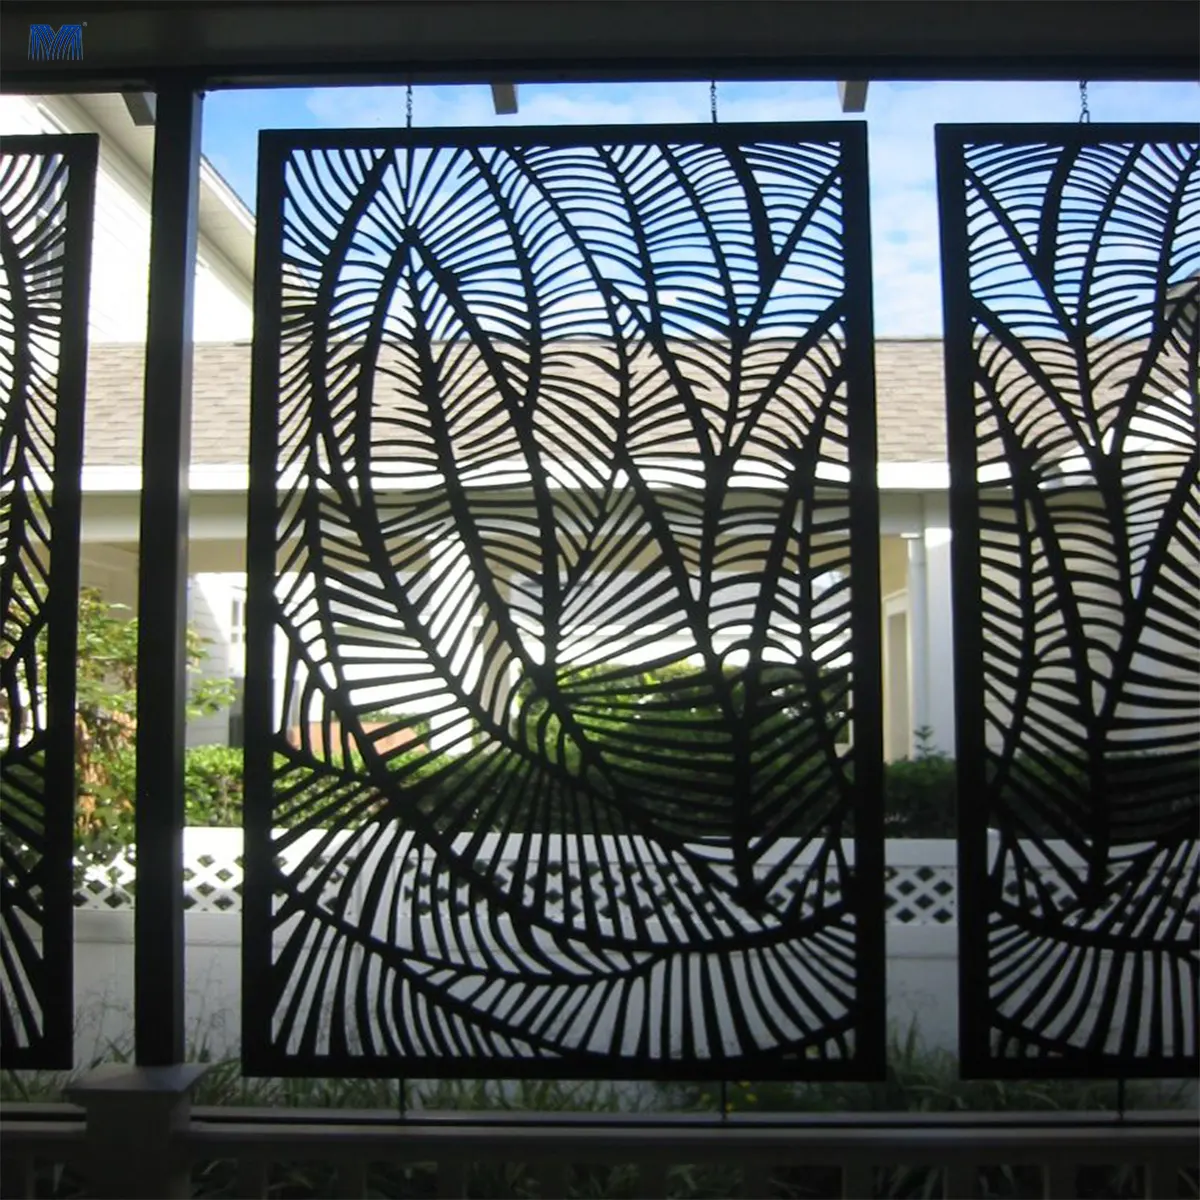 Corten steel metal fence screen home cutting allomunam aluminum panel powder coated lazer material laser cut main gate design